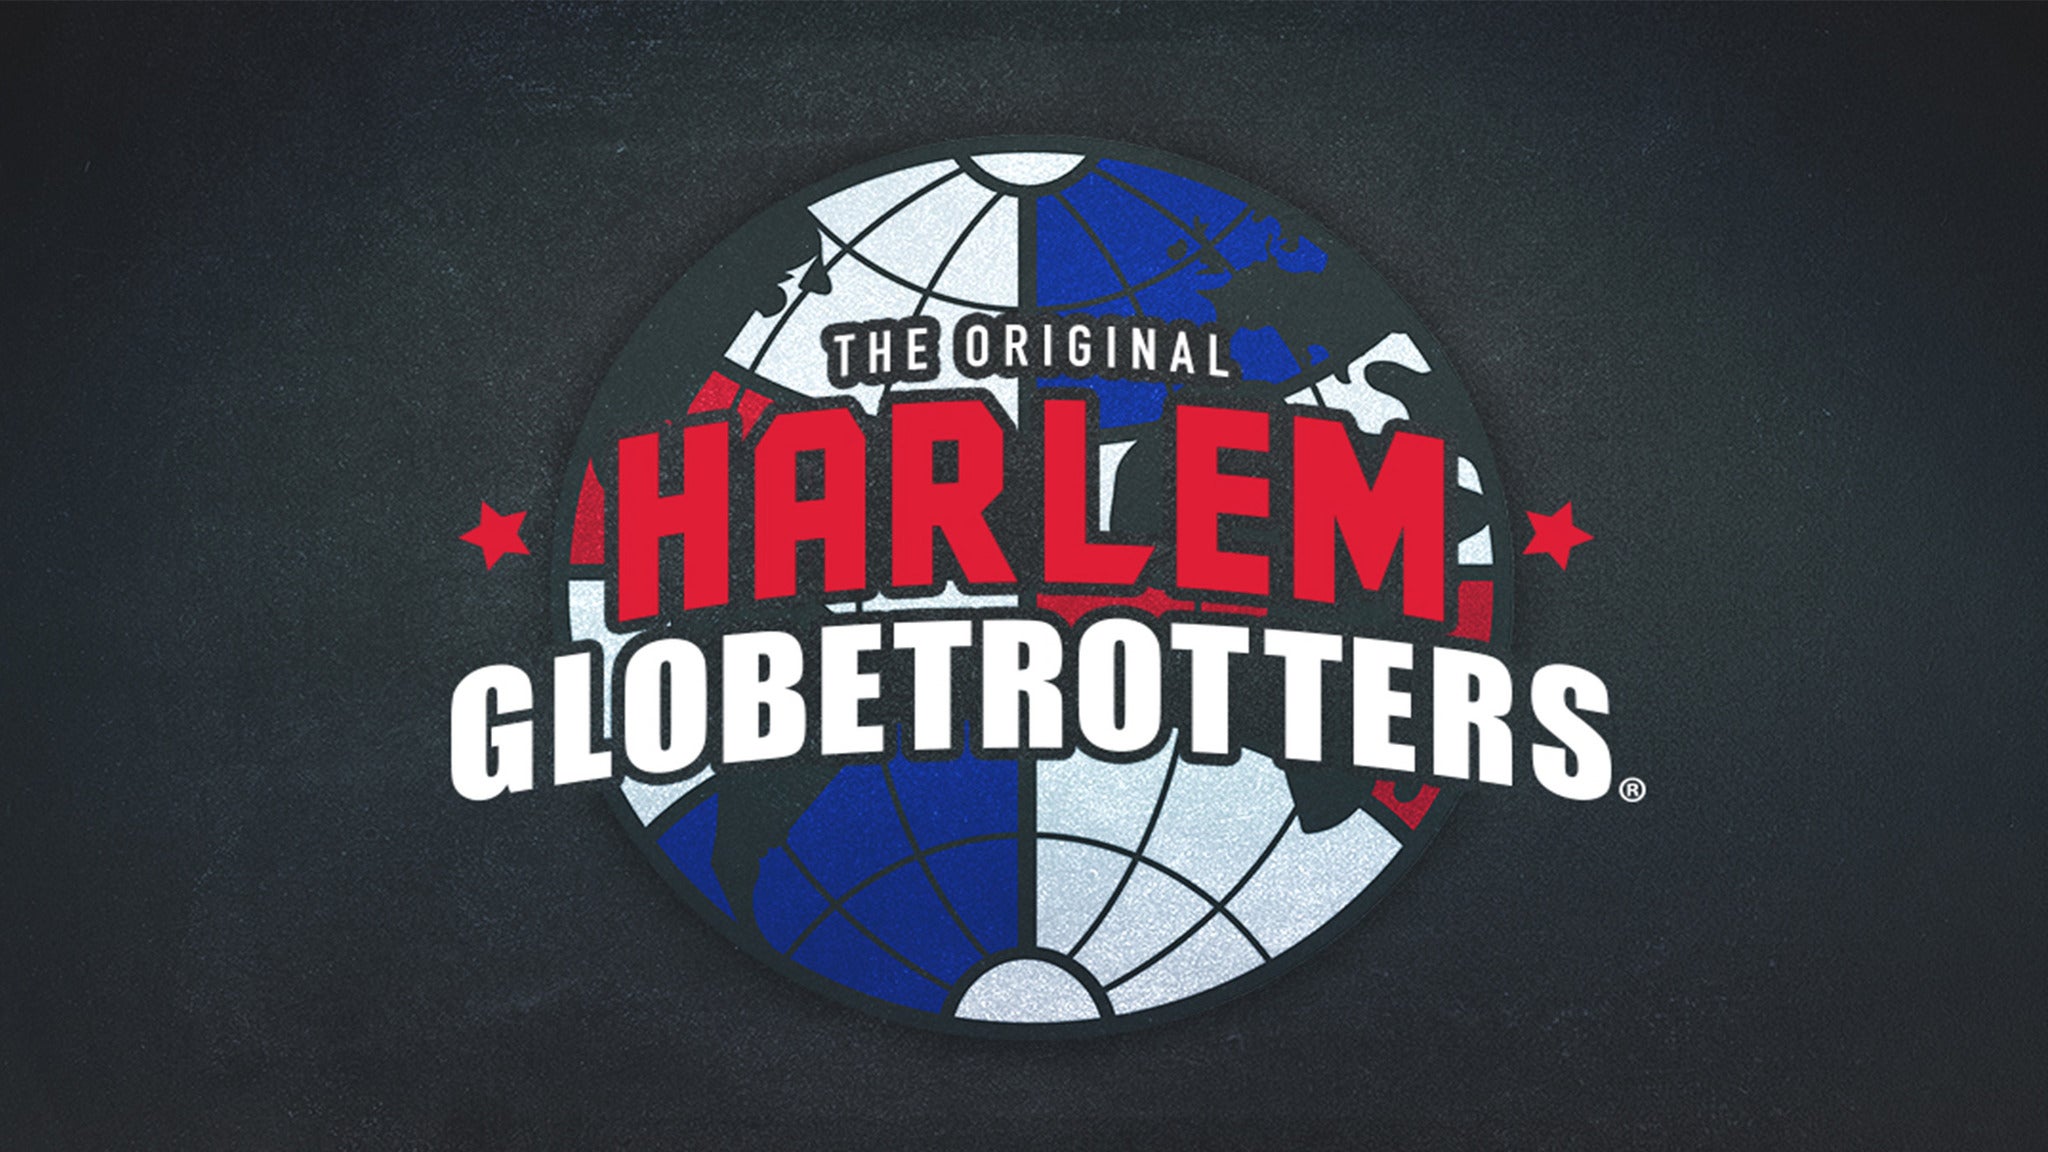 Harlem Globetrotters in Montreal event information